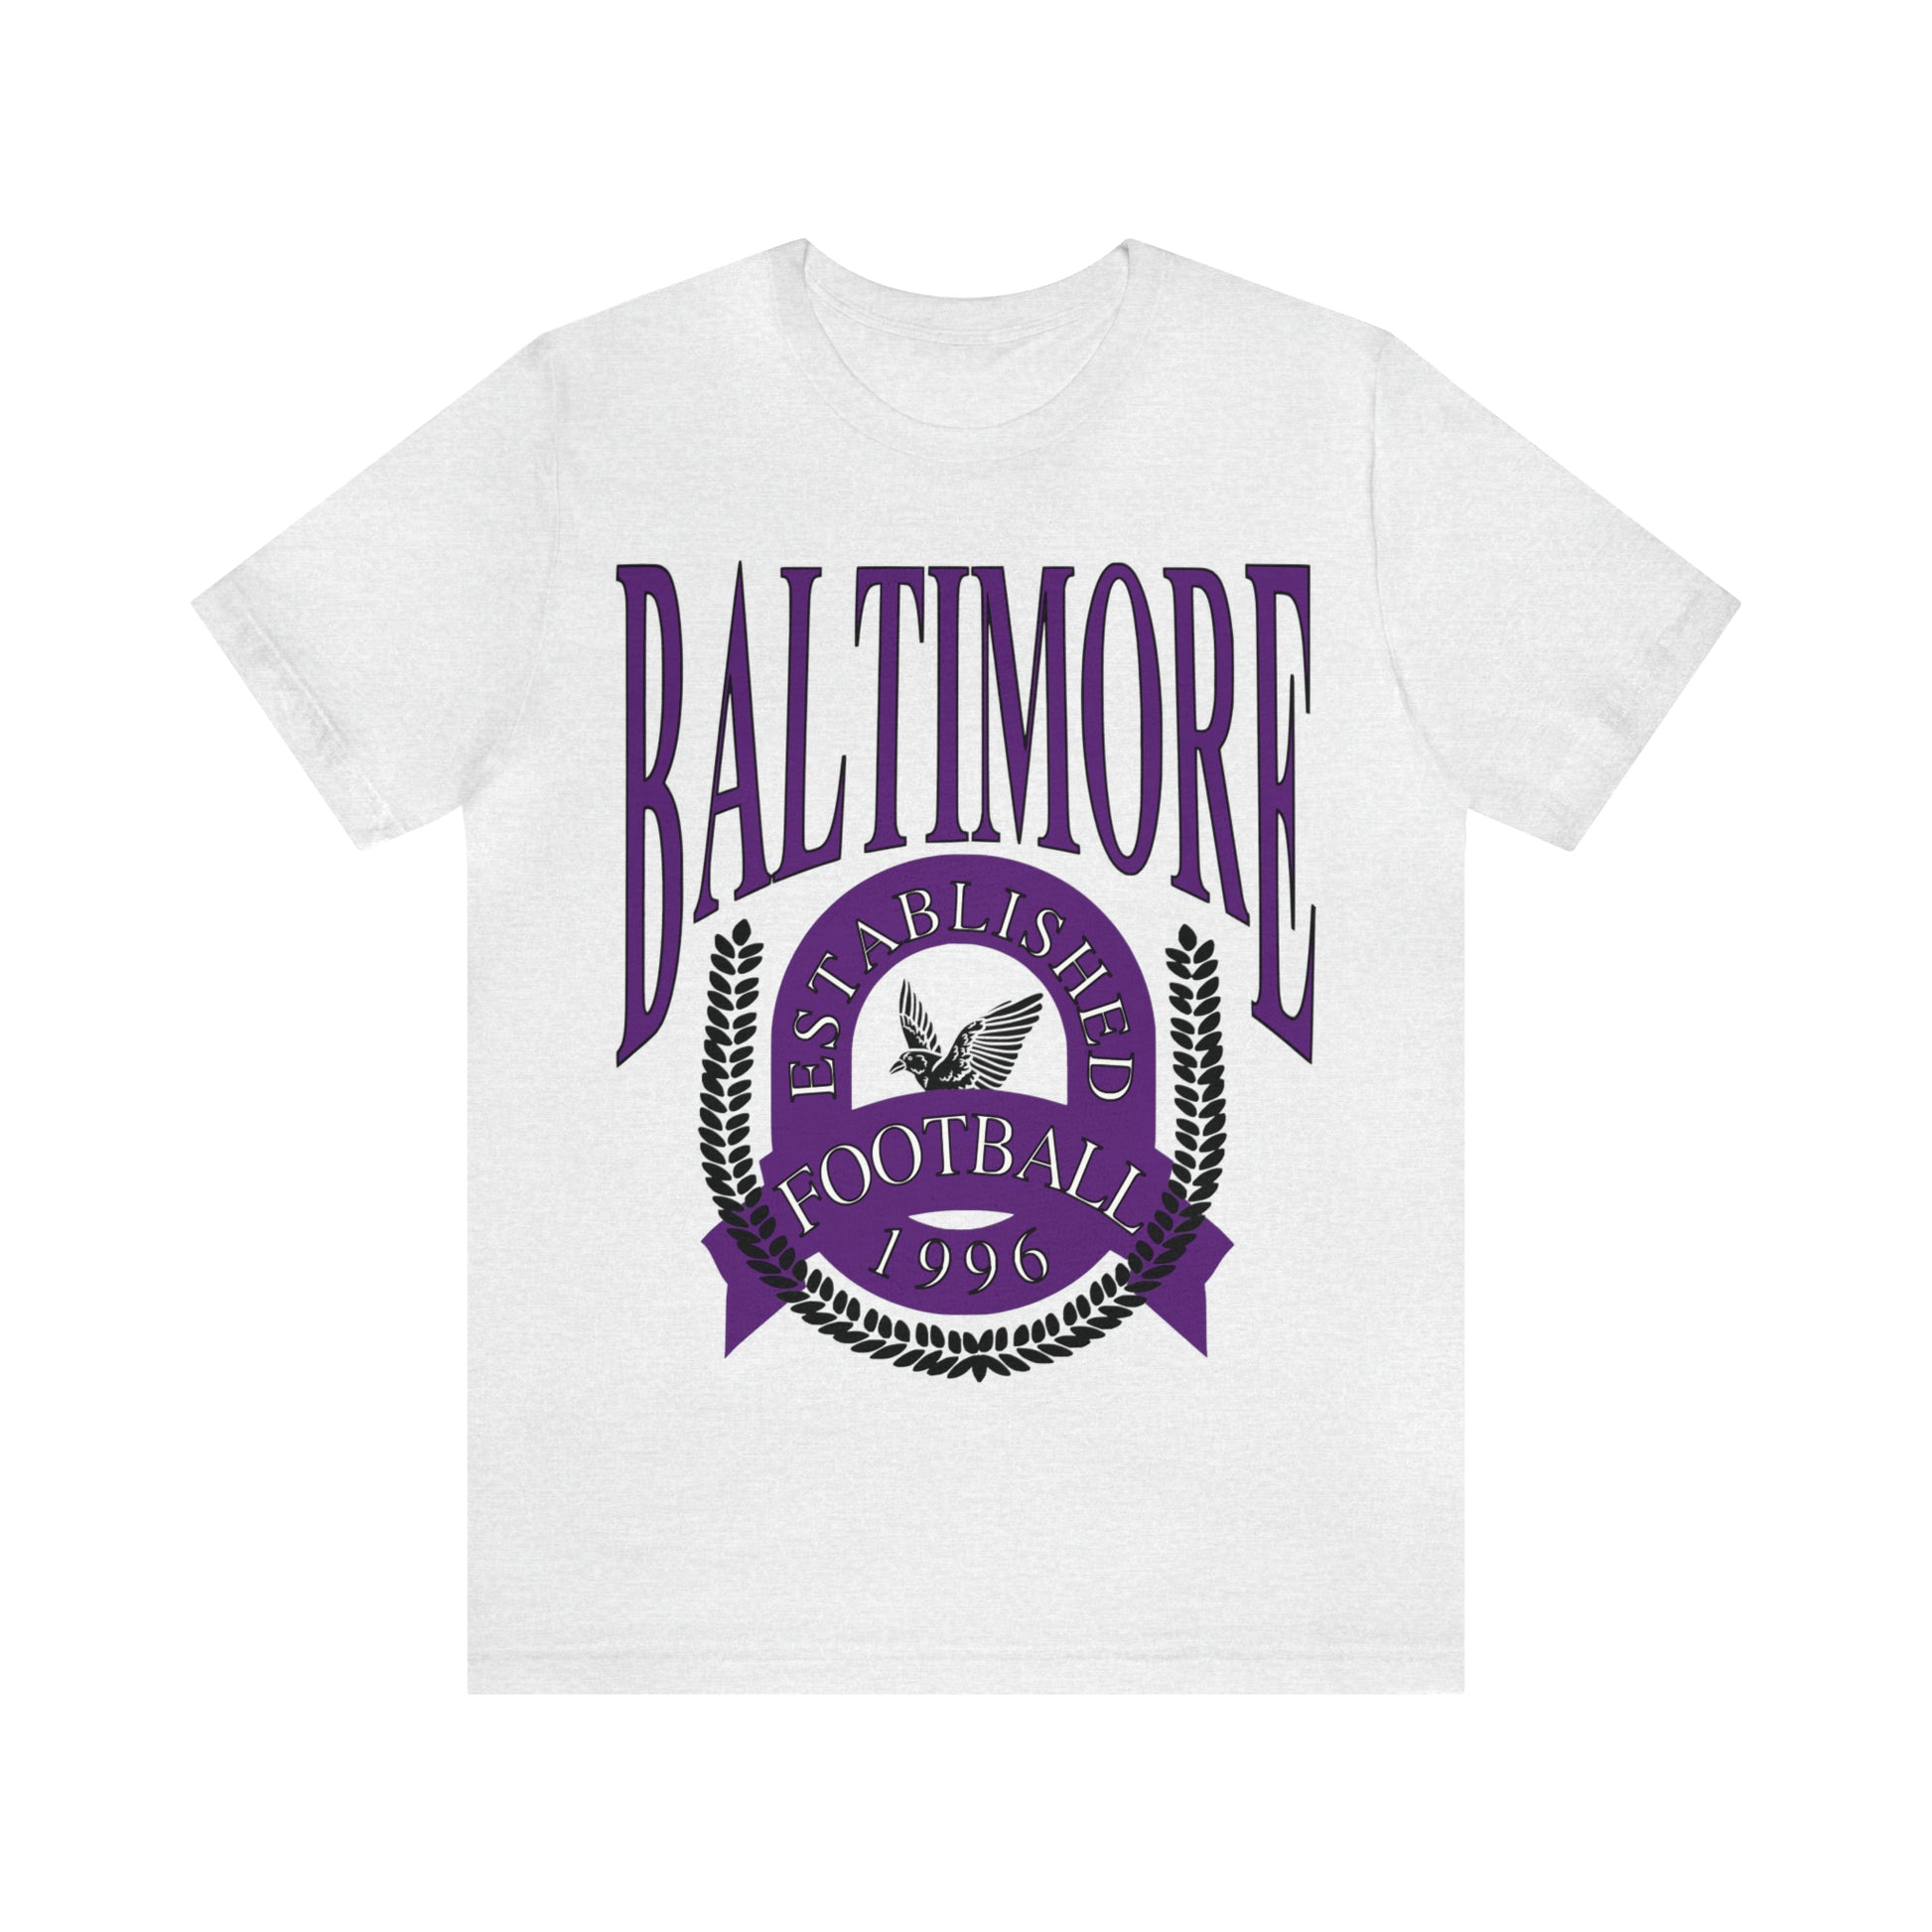 Baltimore Ravens T-Shirt Lamar Jackson, OBJ, Odell Beckham Jr, Men's, Women's, Lamar Jackson, Vintage, Retro, Short Sleeve, The Dallas Family, Etsy, The Dallas Family, Oversized, Cute, Affordable, Retro, Cheap, Soft, Ash Light Heather Gray